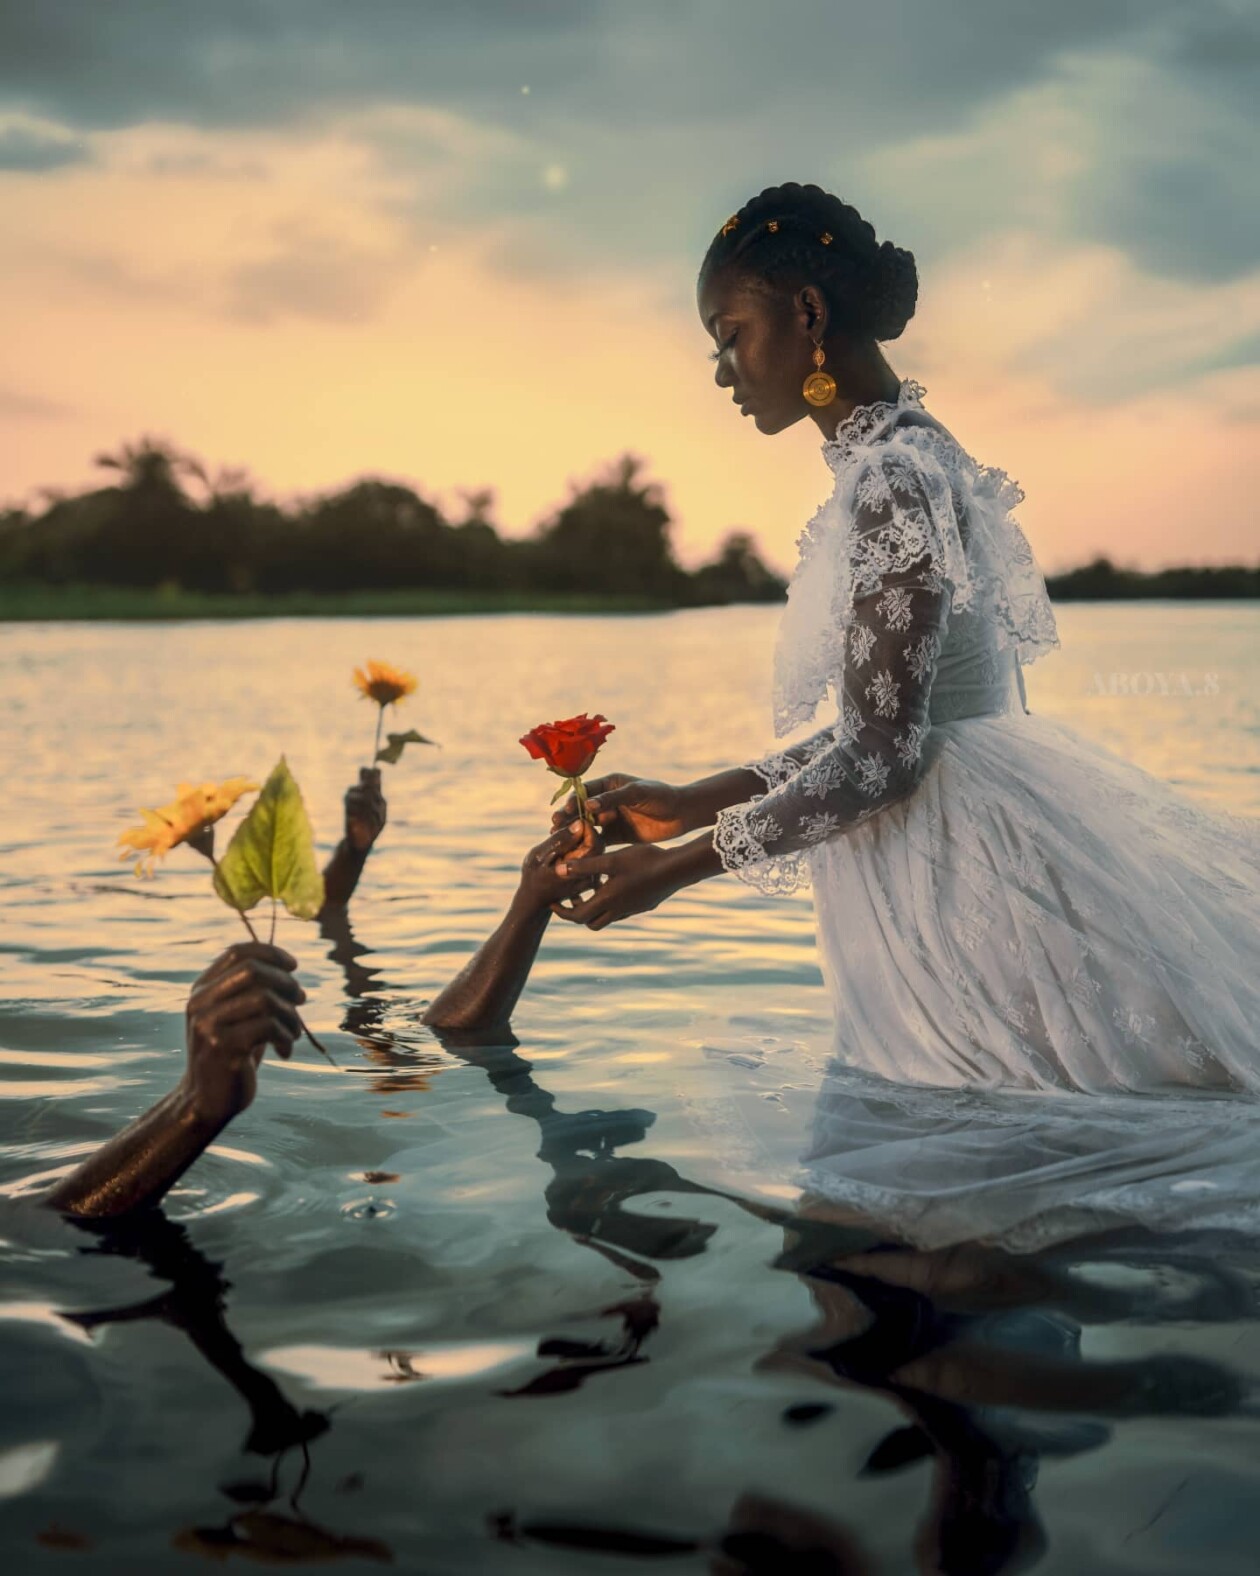 Black Beauty, The Splendid Photography By Michael Aboya (3)